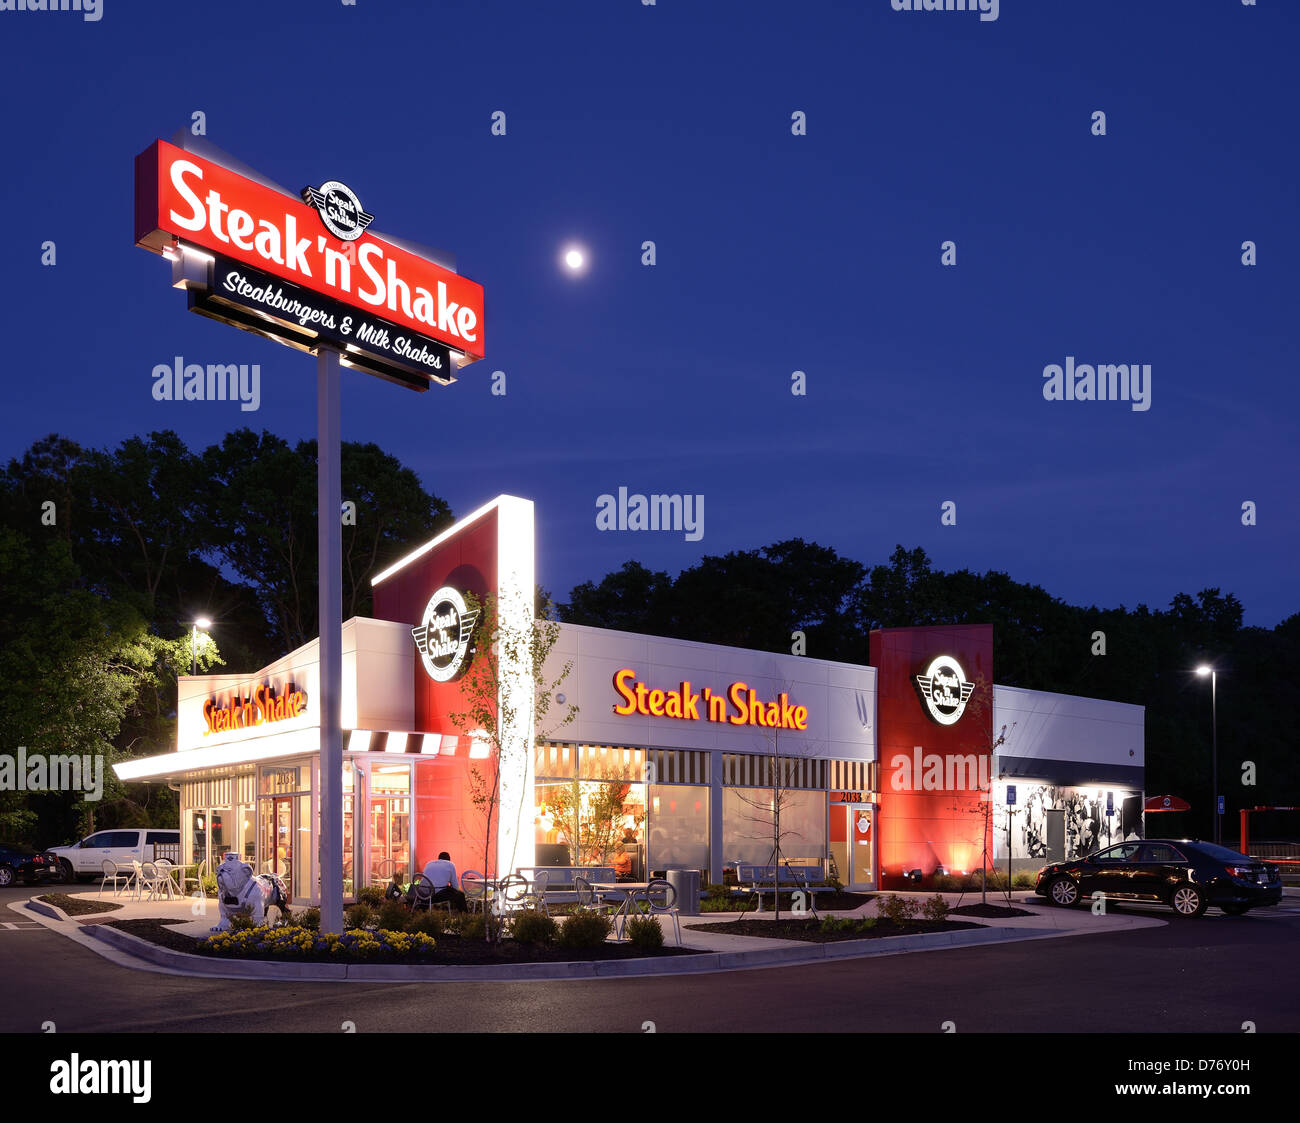 Steak 'n Shake chain restaurant. Stock Photo